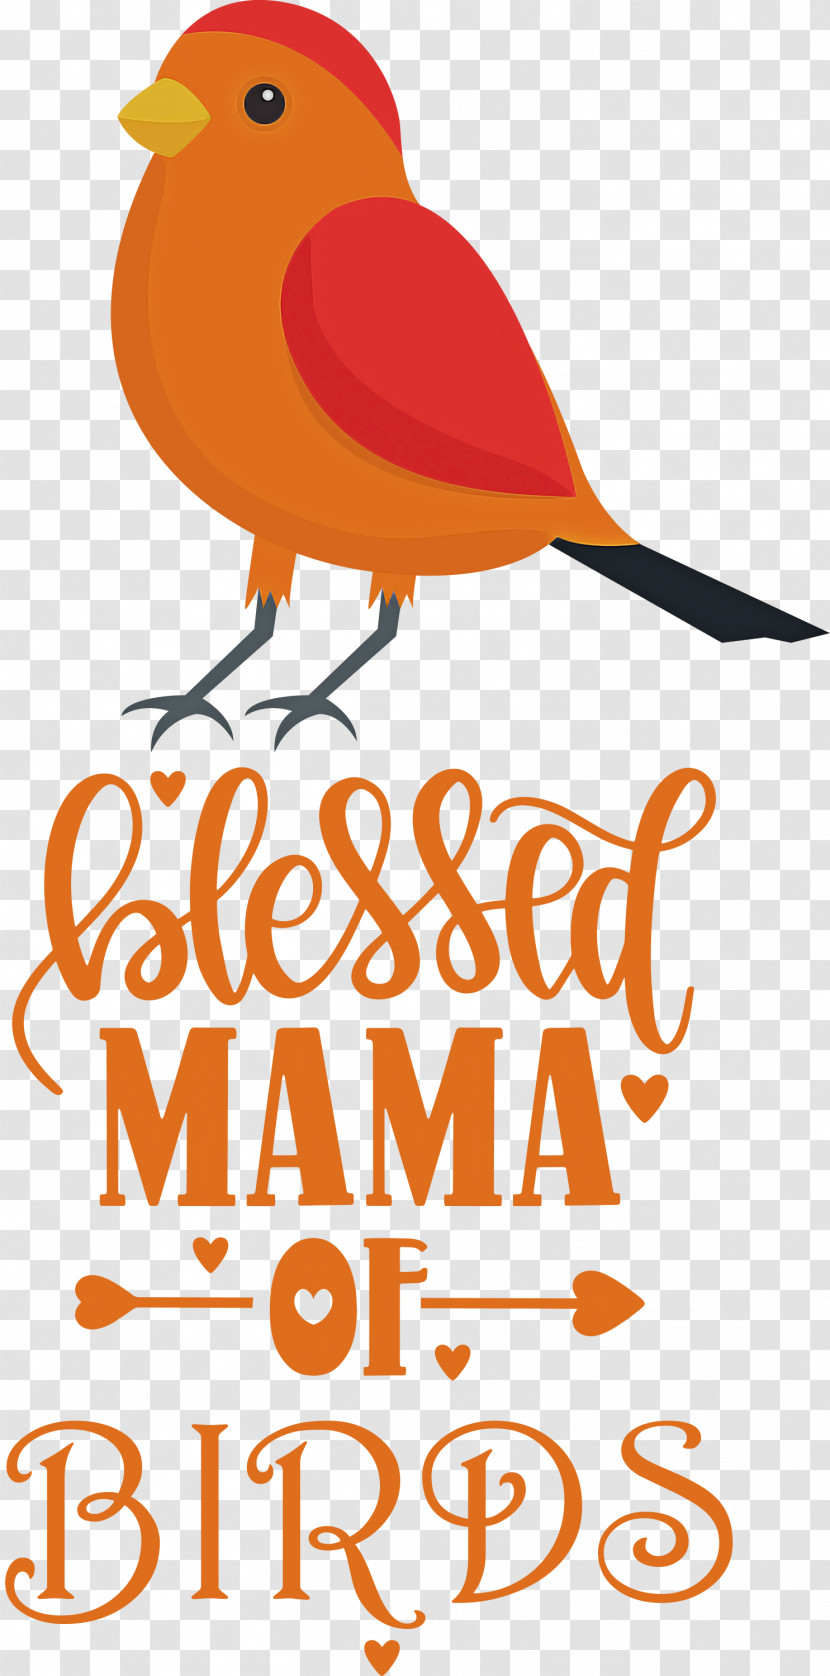 Bird Birds Blessed Mama Of Birds Transparent PNG